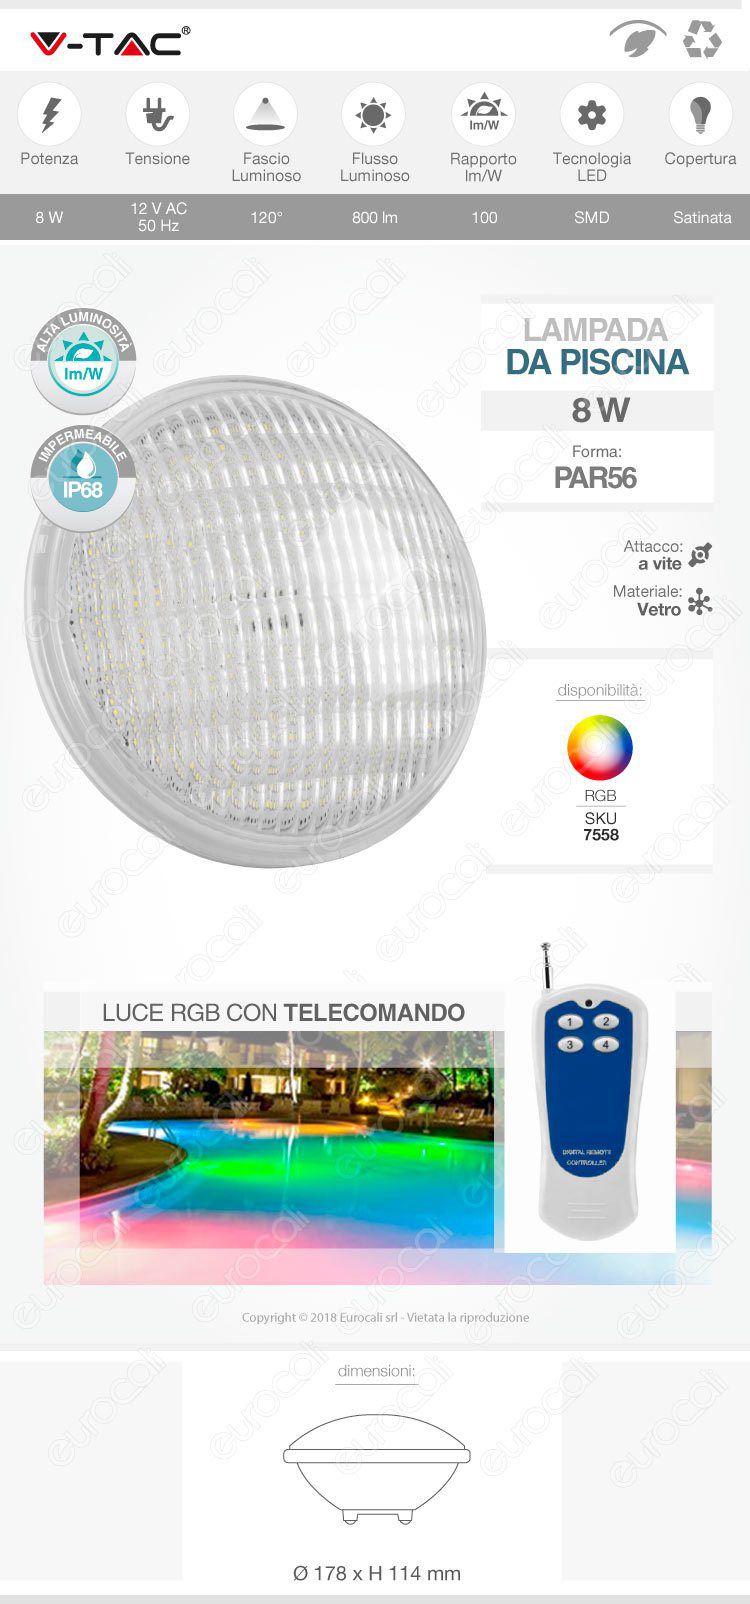 V-Tac Lampadina LED piscina